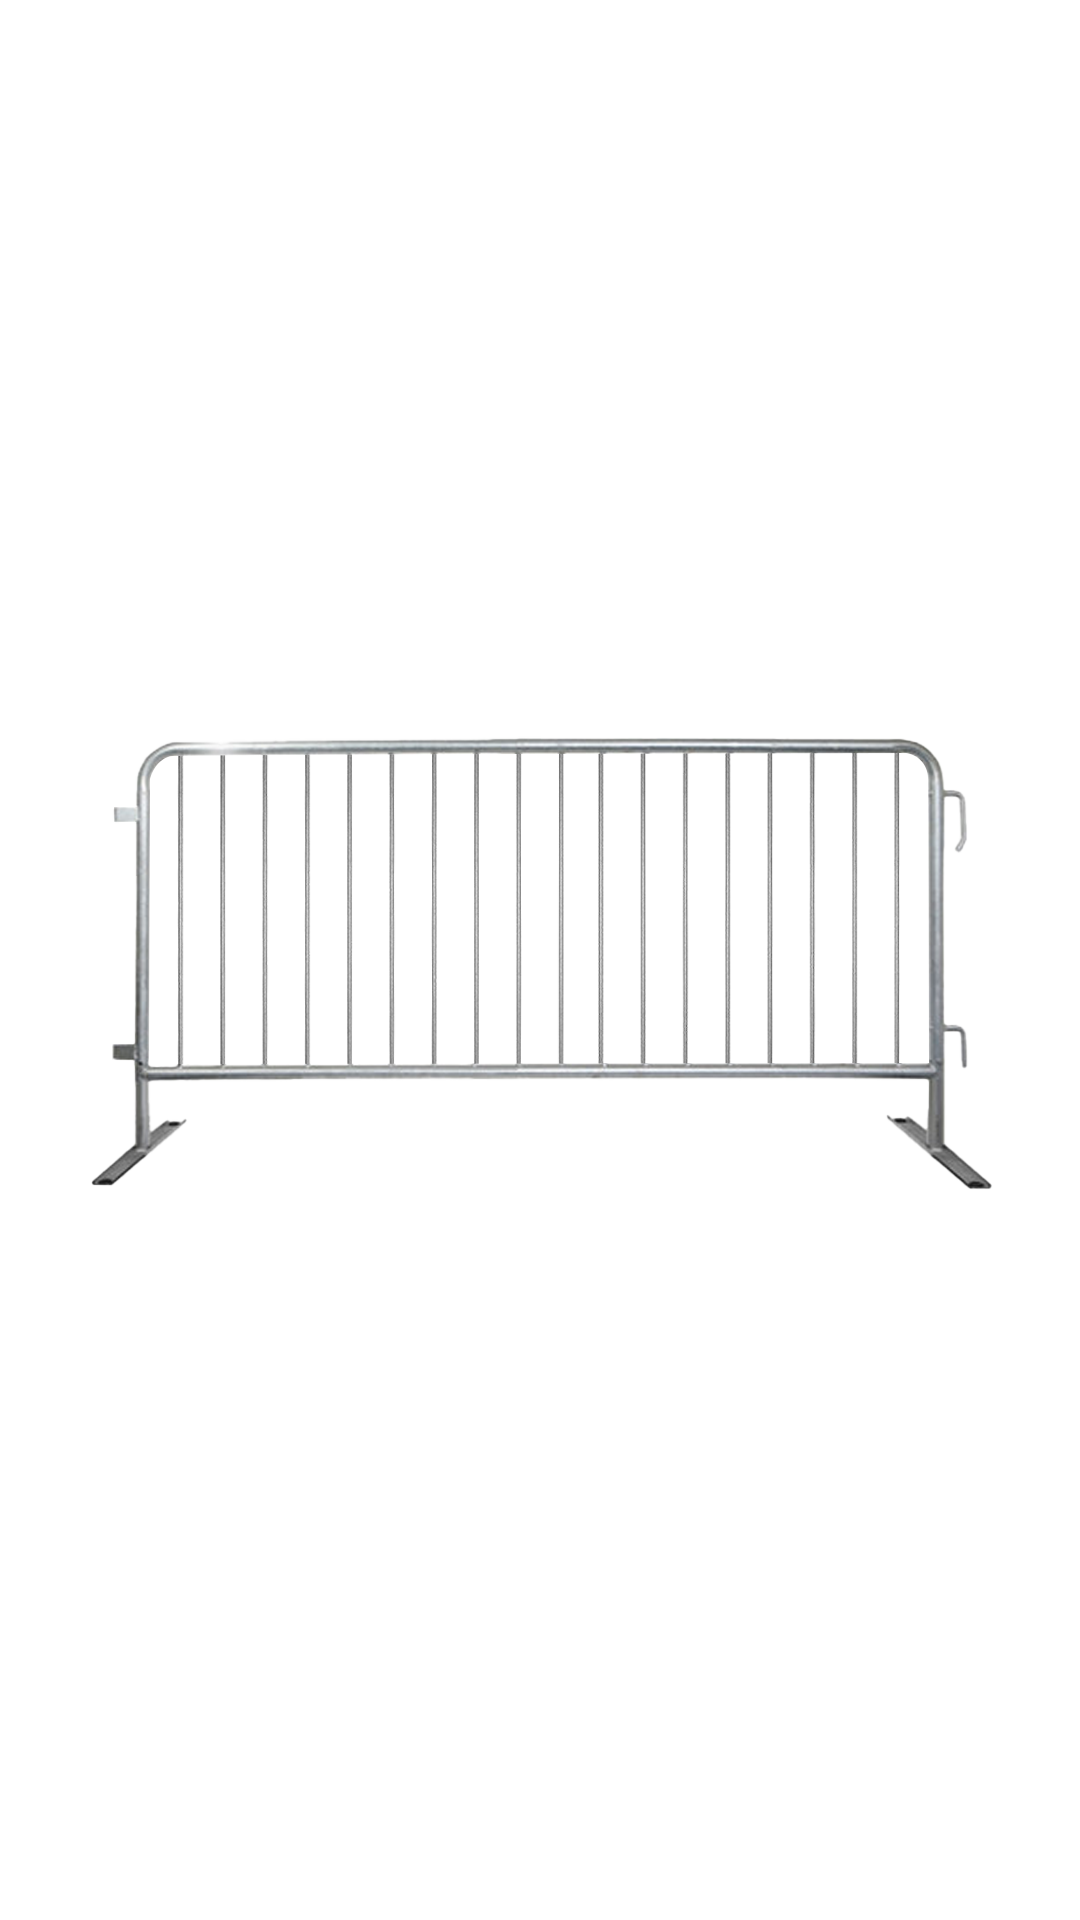 6.5FT Steel Barricade